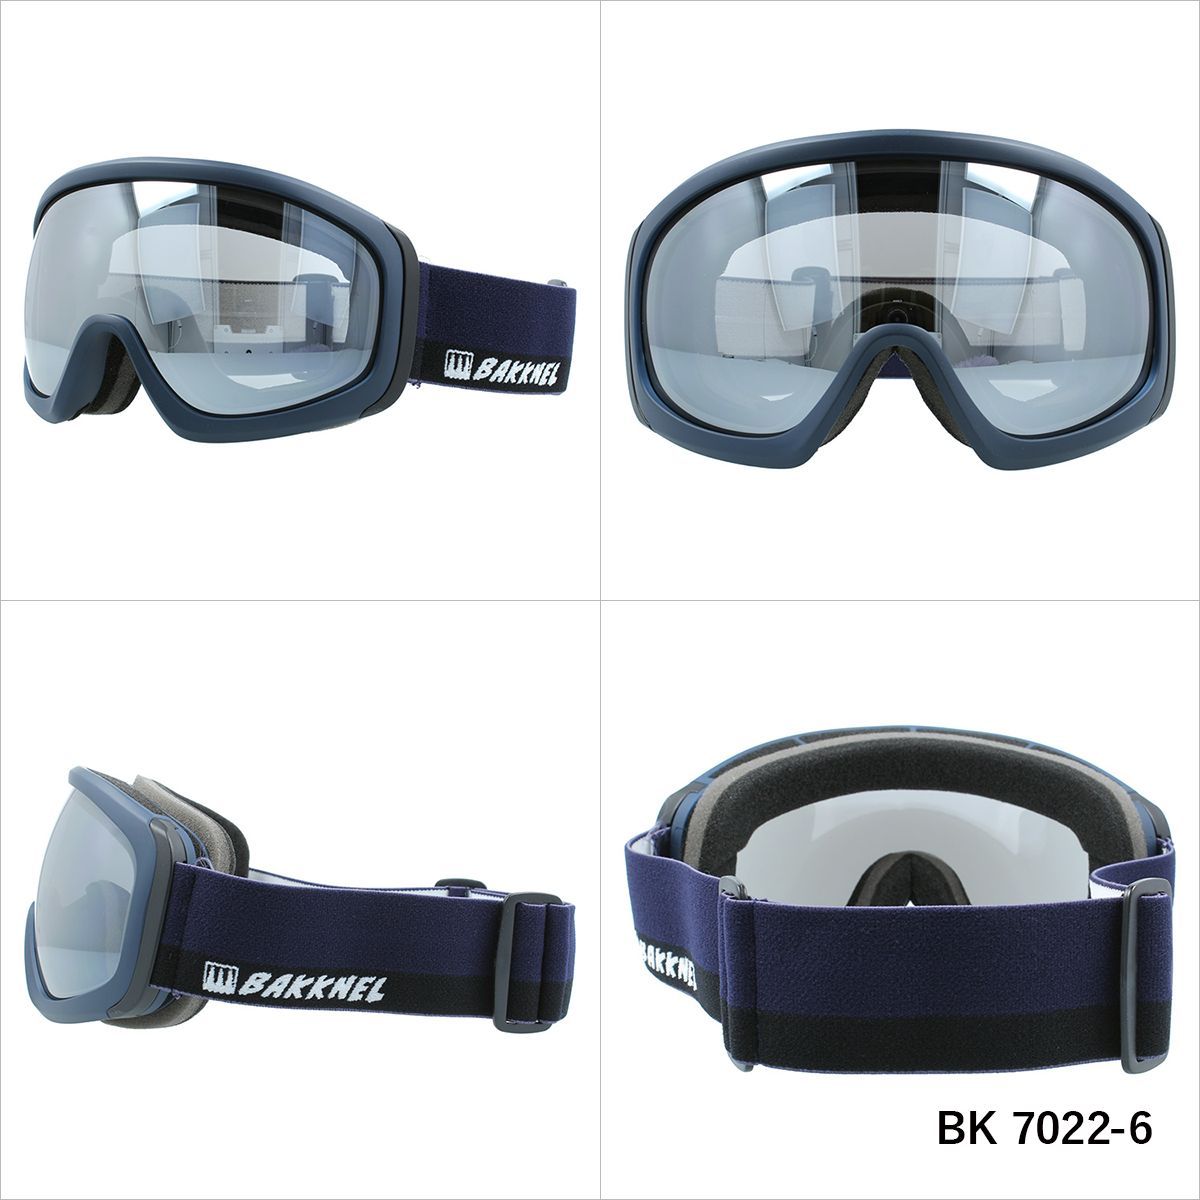 BAKKNEL バクネル BK 7022 眼鏡対応 ヘルメット対応 ミラーレンズ スノーゴーグル スキー スノーボード スノボ 球面ダブルレンズ フレームあり メンズ レディース ウィンタースポーツ 曇り防止 曇り止め 誕生日 プレゼント 男性 女性